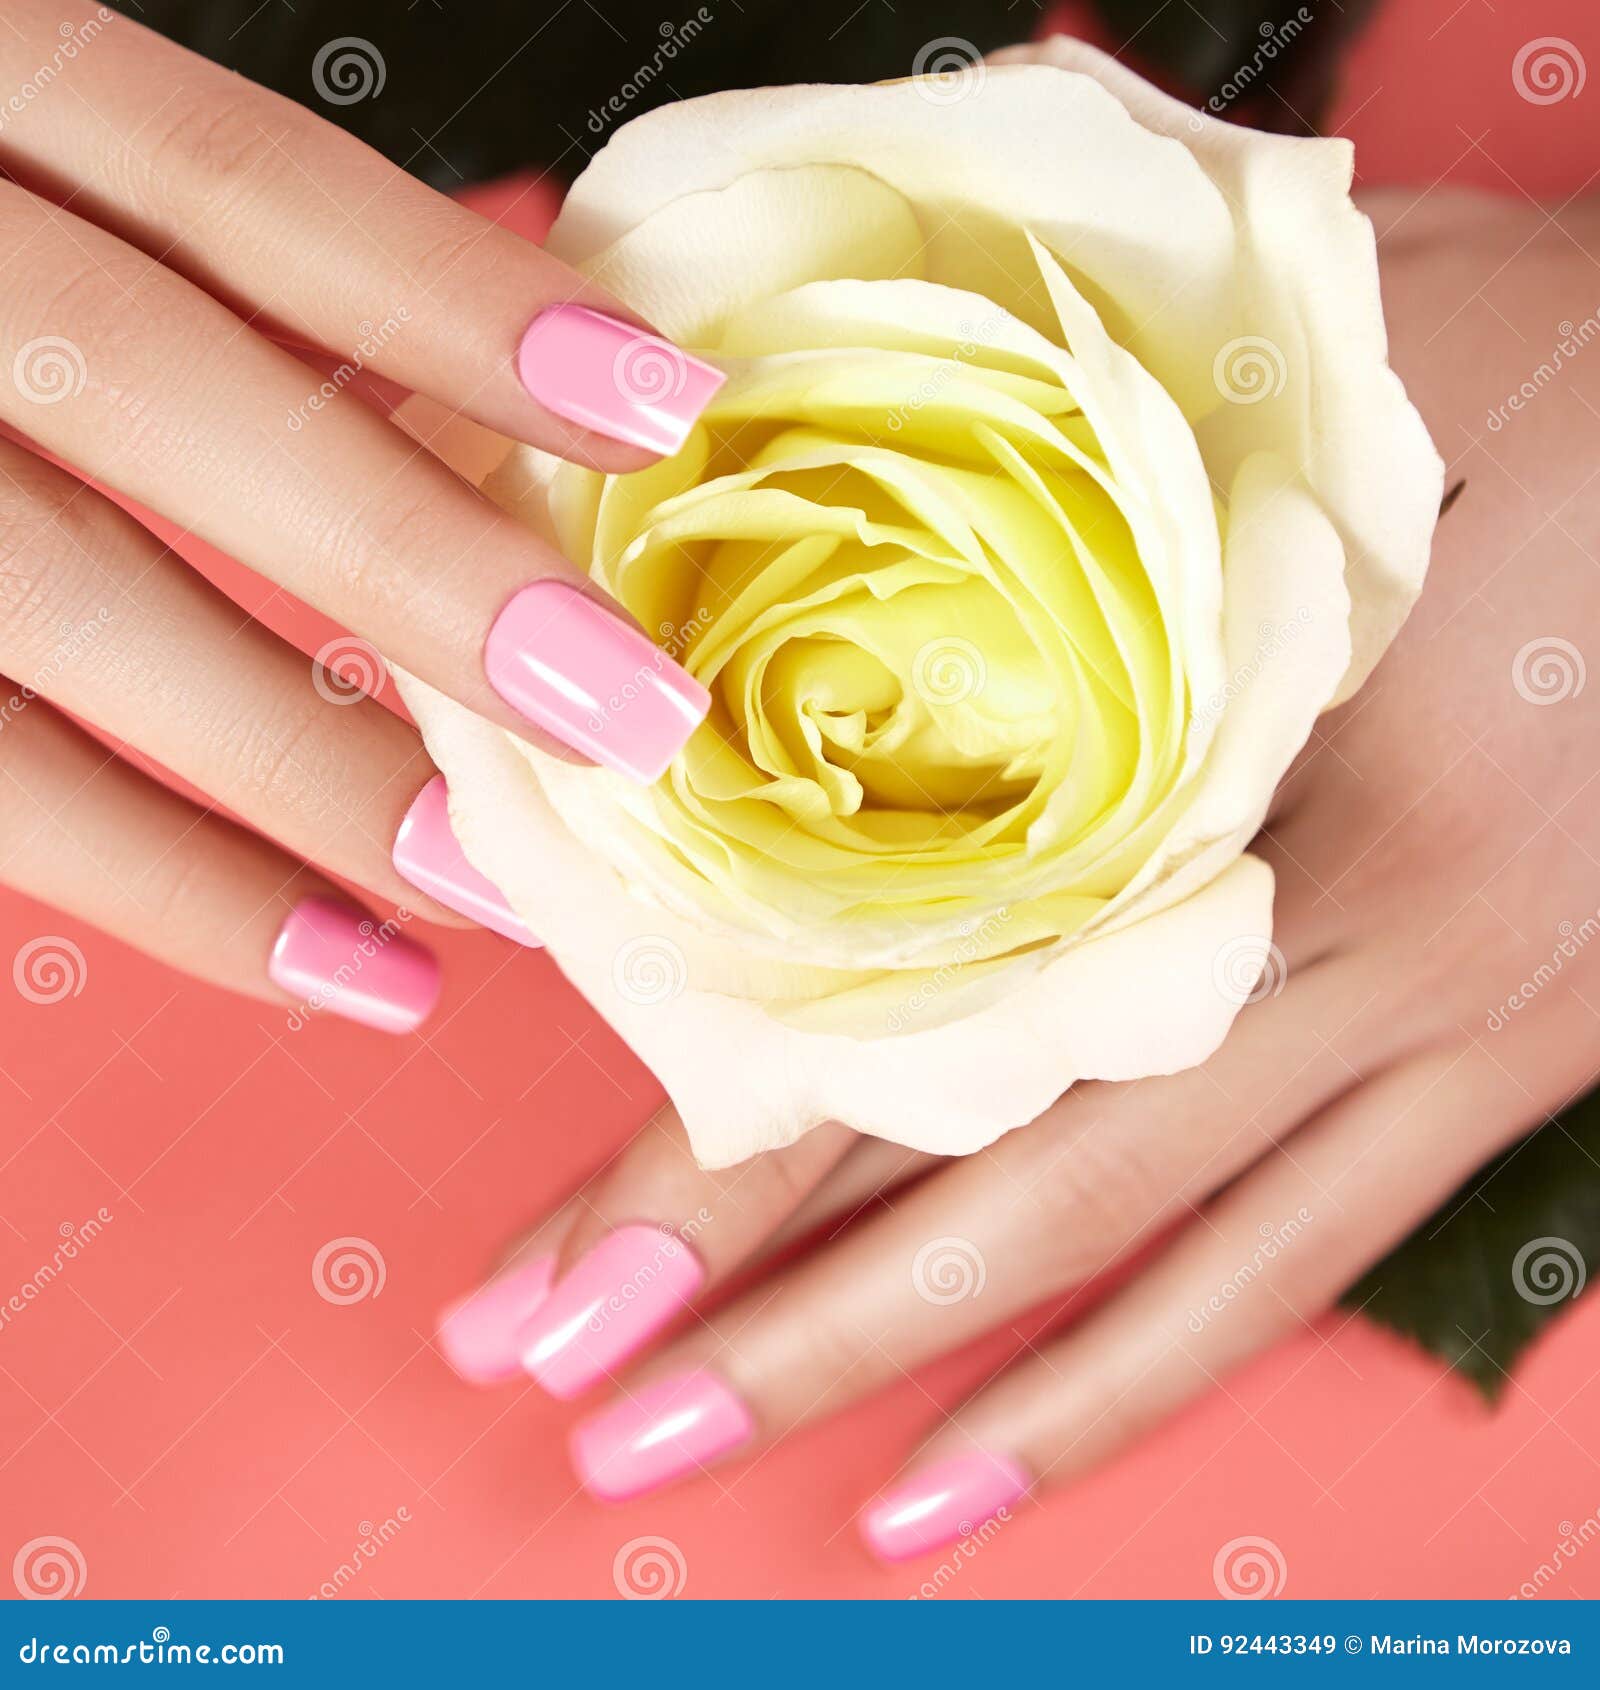 manicured nails with pink nail polish. manicure with nailpolish. fashion art manicure, shiny gel lacquer. nails salon